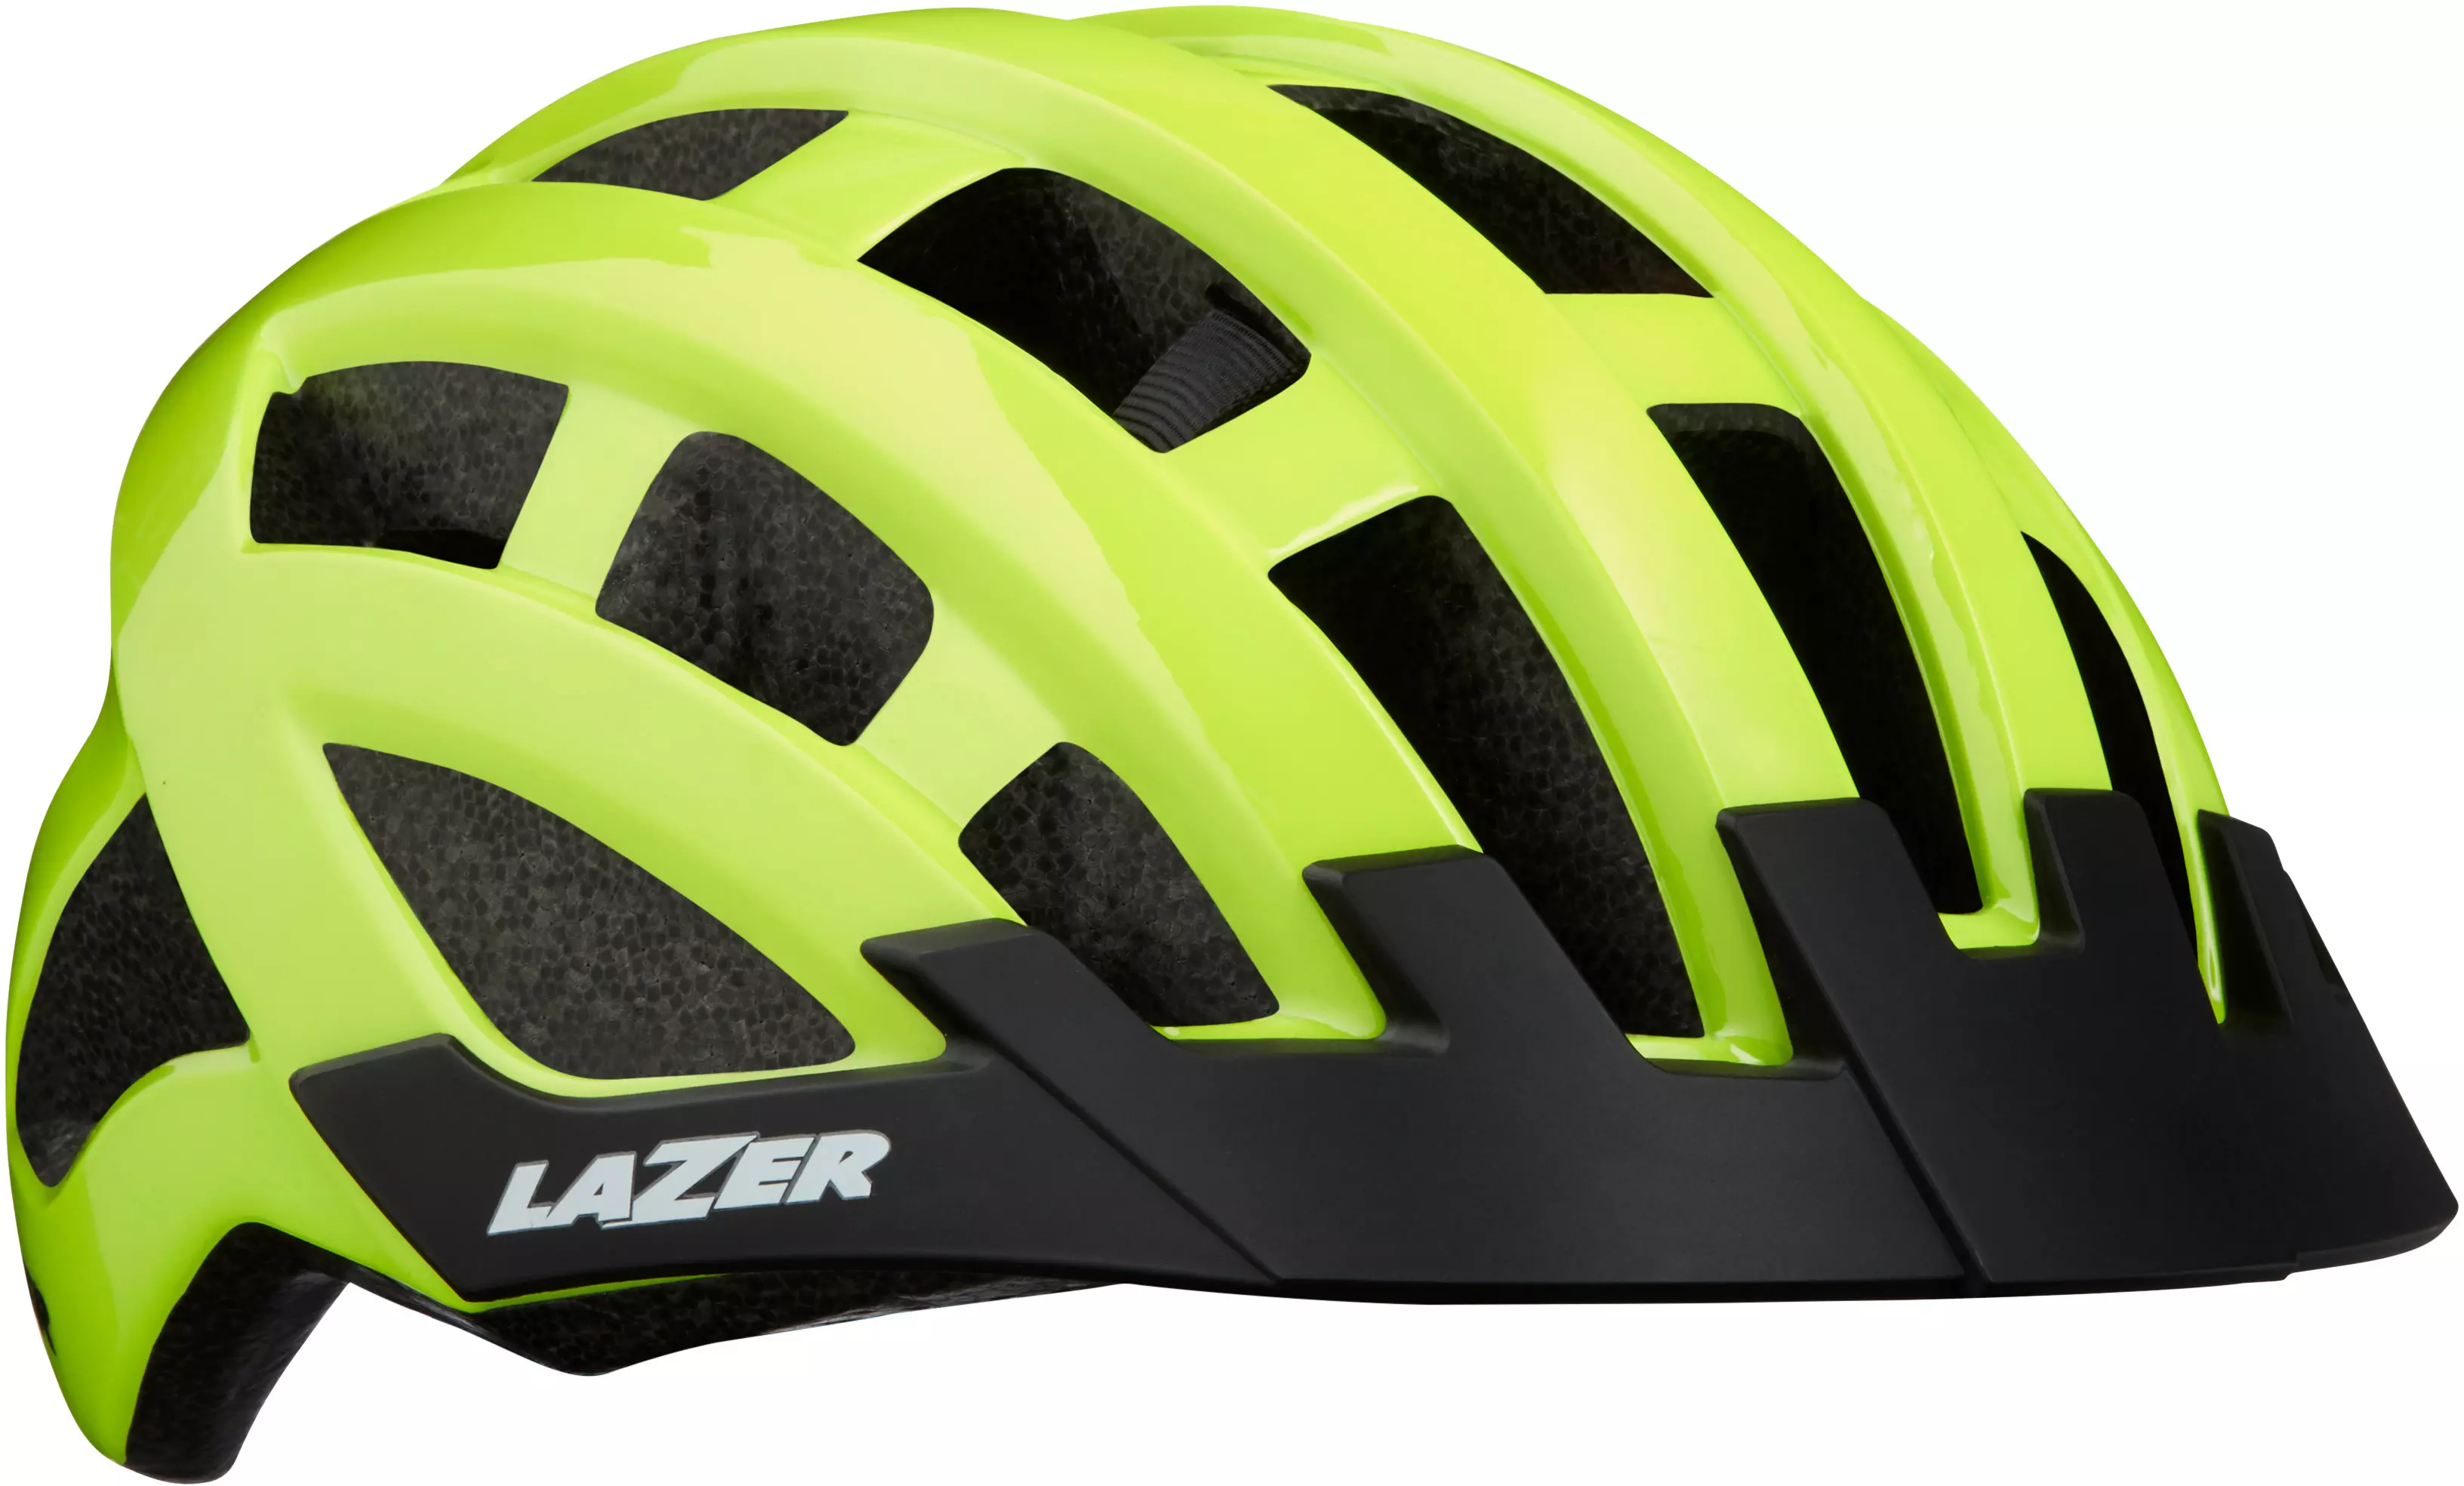 laser helmet bike